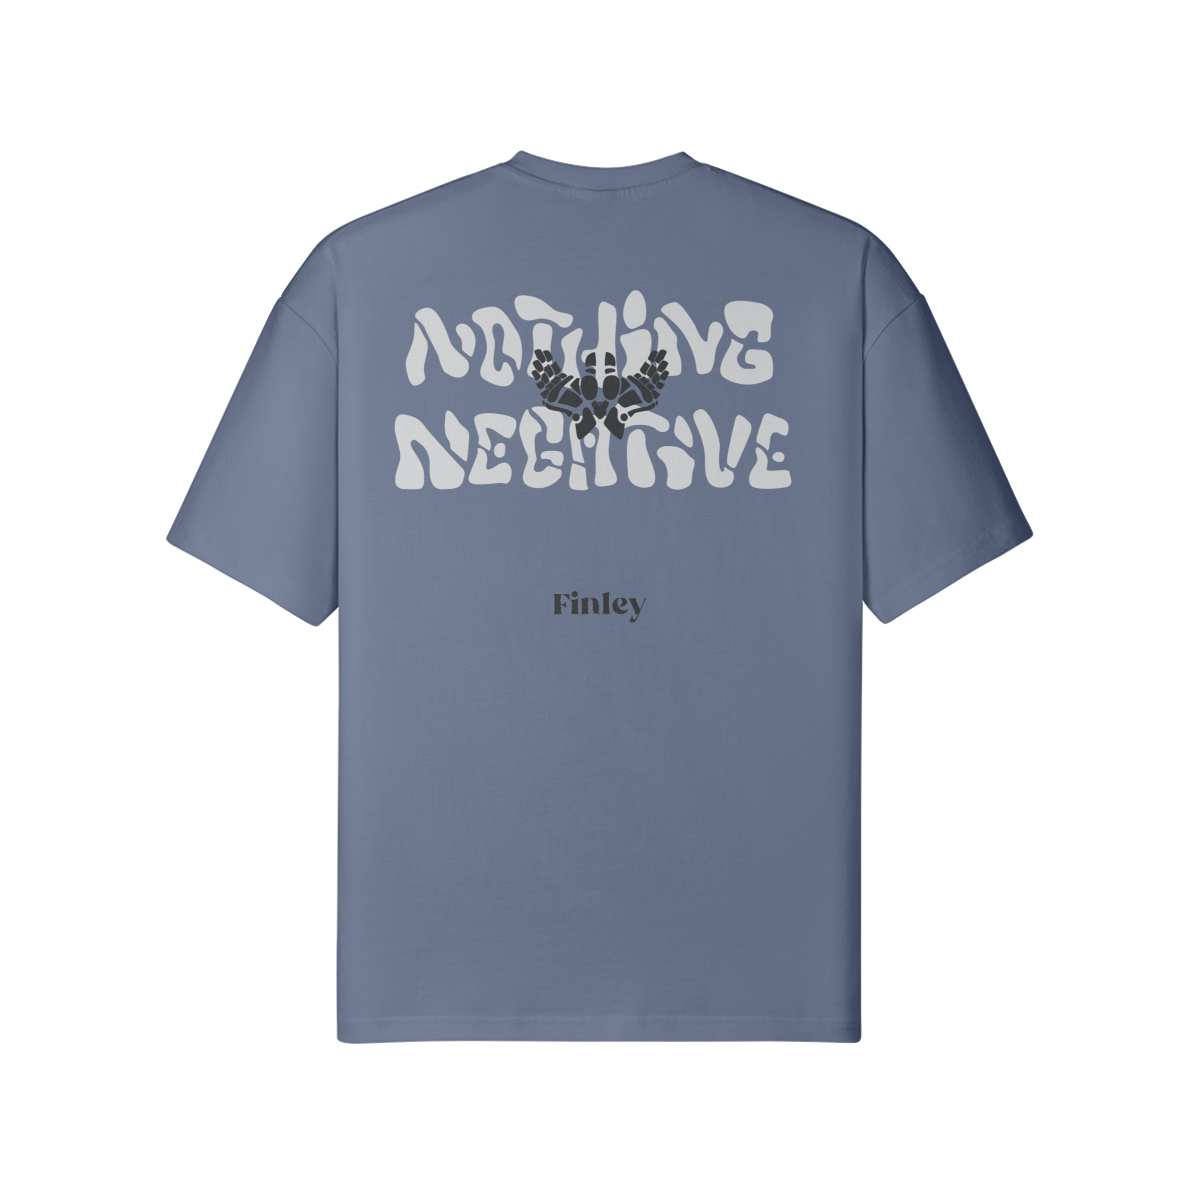 Finley X Nothing Negative - The Bird